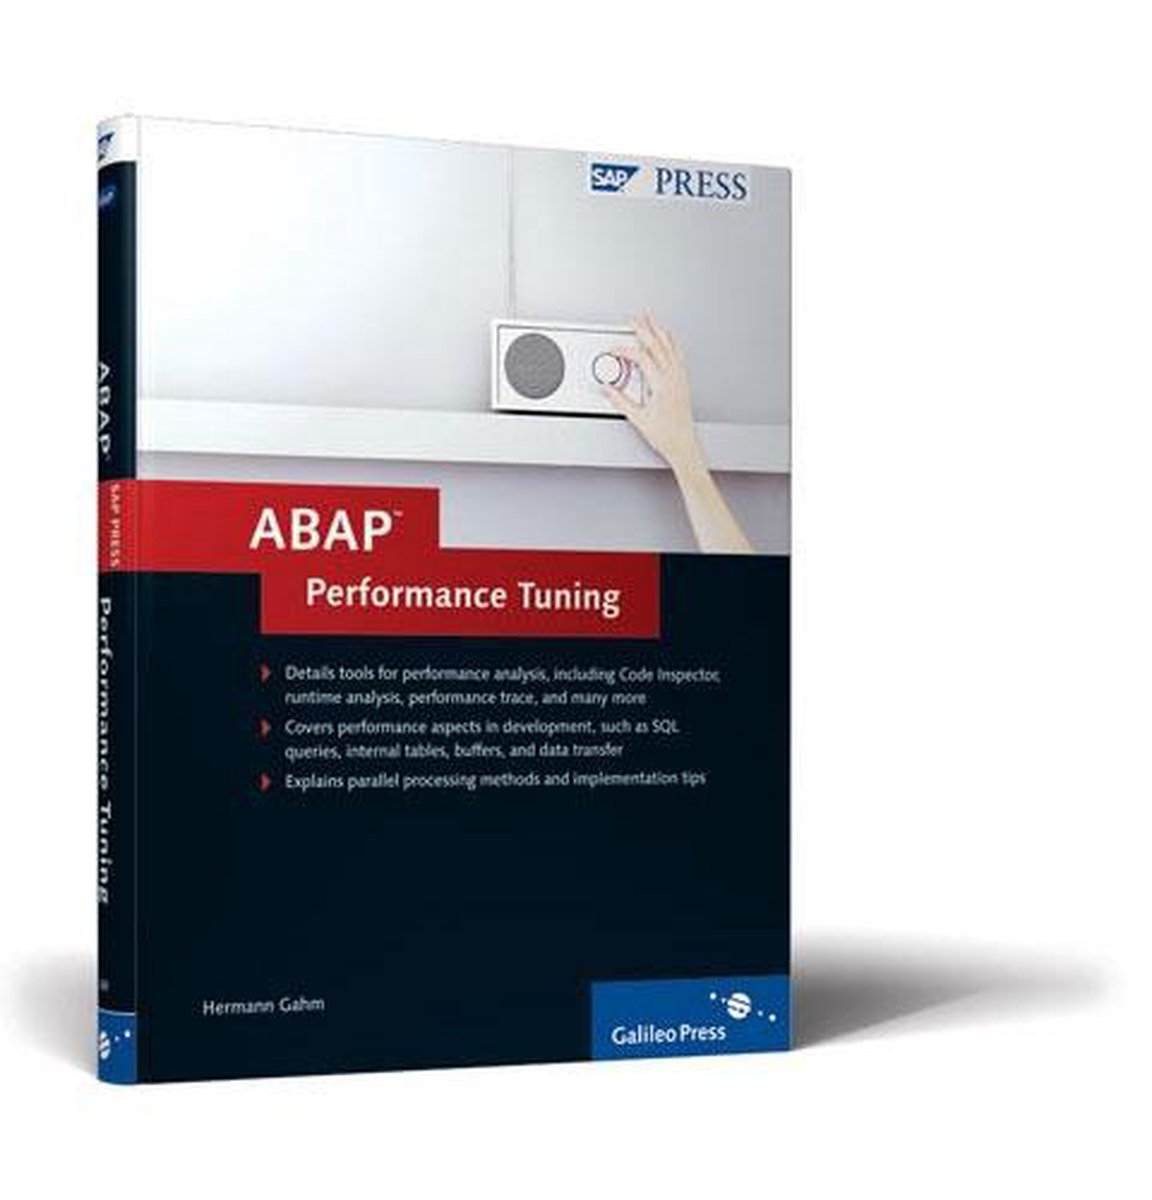 ABAP Performance Tuning